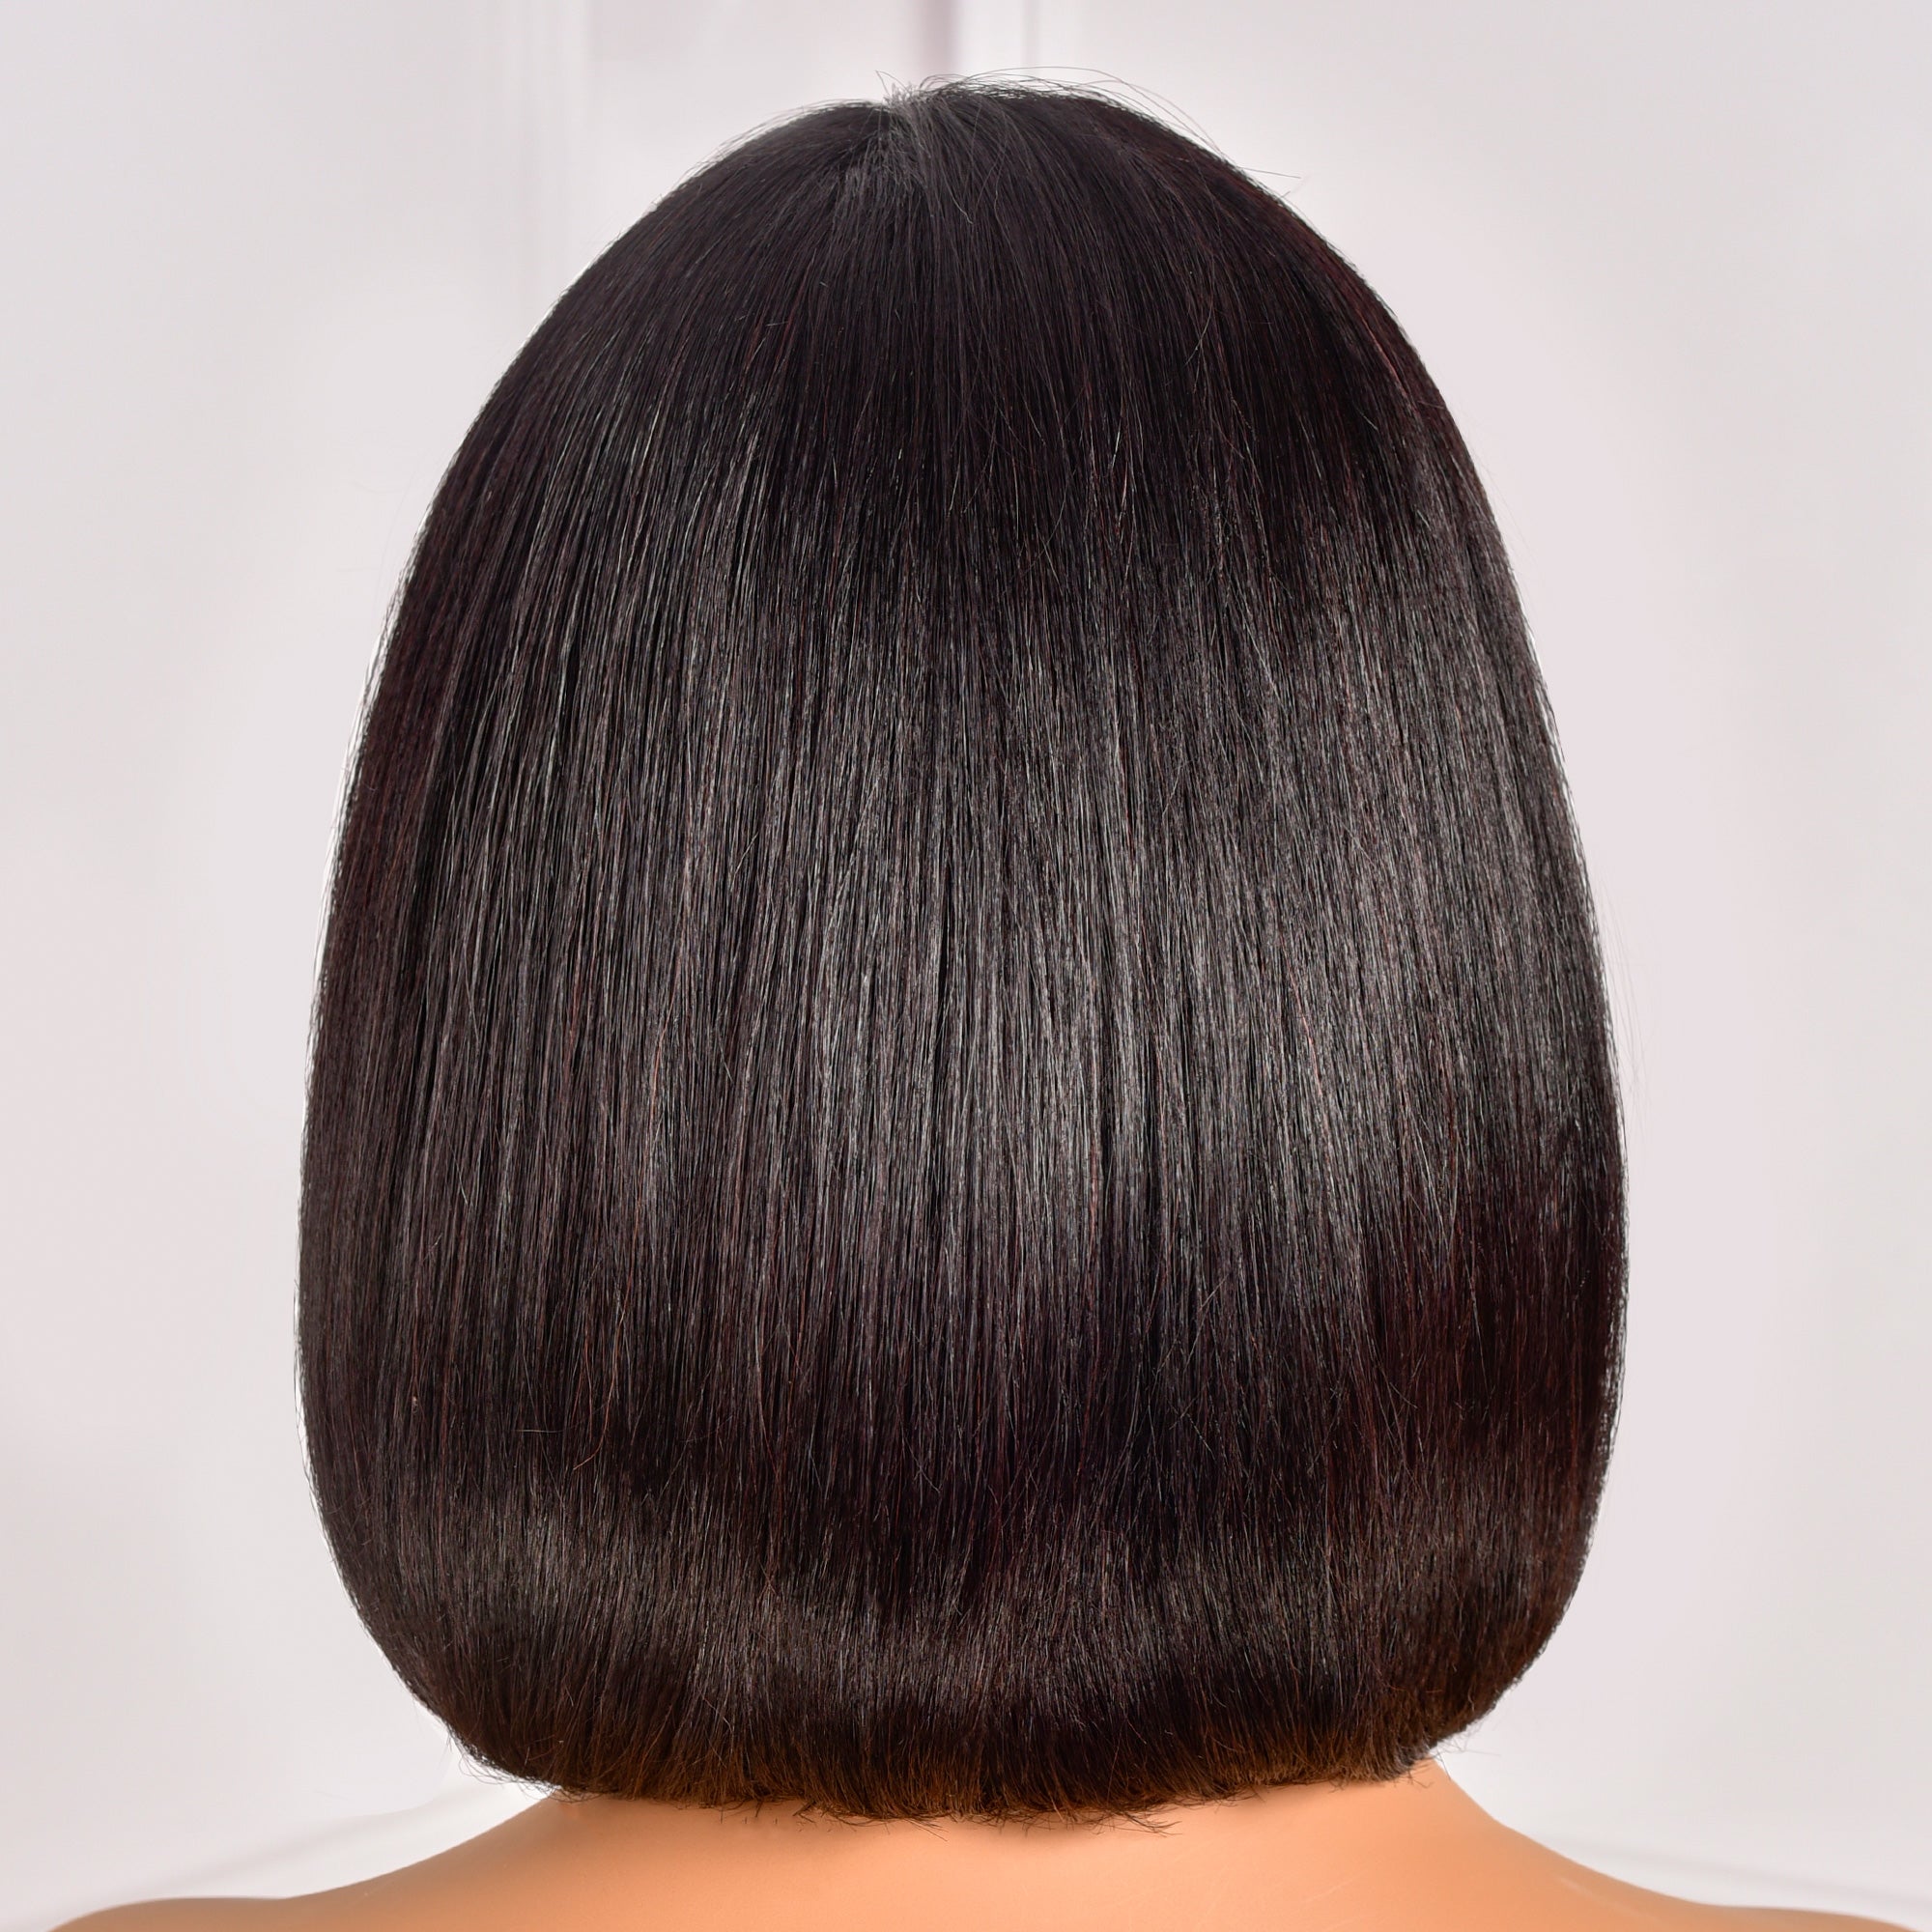 𝗖𝗮𝗽𝗿𝗶𝗰𝗼𝗿𝗻 | Toyotress U+ Human Hair Bob Wigs - 10 Inch Blunt Cut Short Black Bob Wigs With Bangs, Light Yaki Straight Realistic Look HD Invisible 13*4 T-Part long Lace Glueless 100% Brazilian Virgin Hair Wigs(LF0922H)